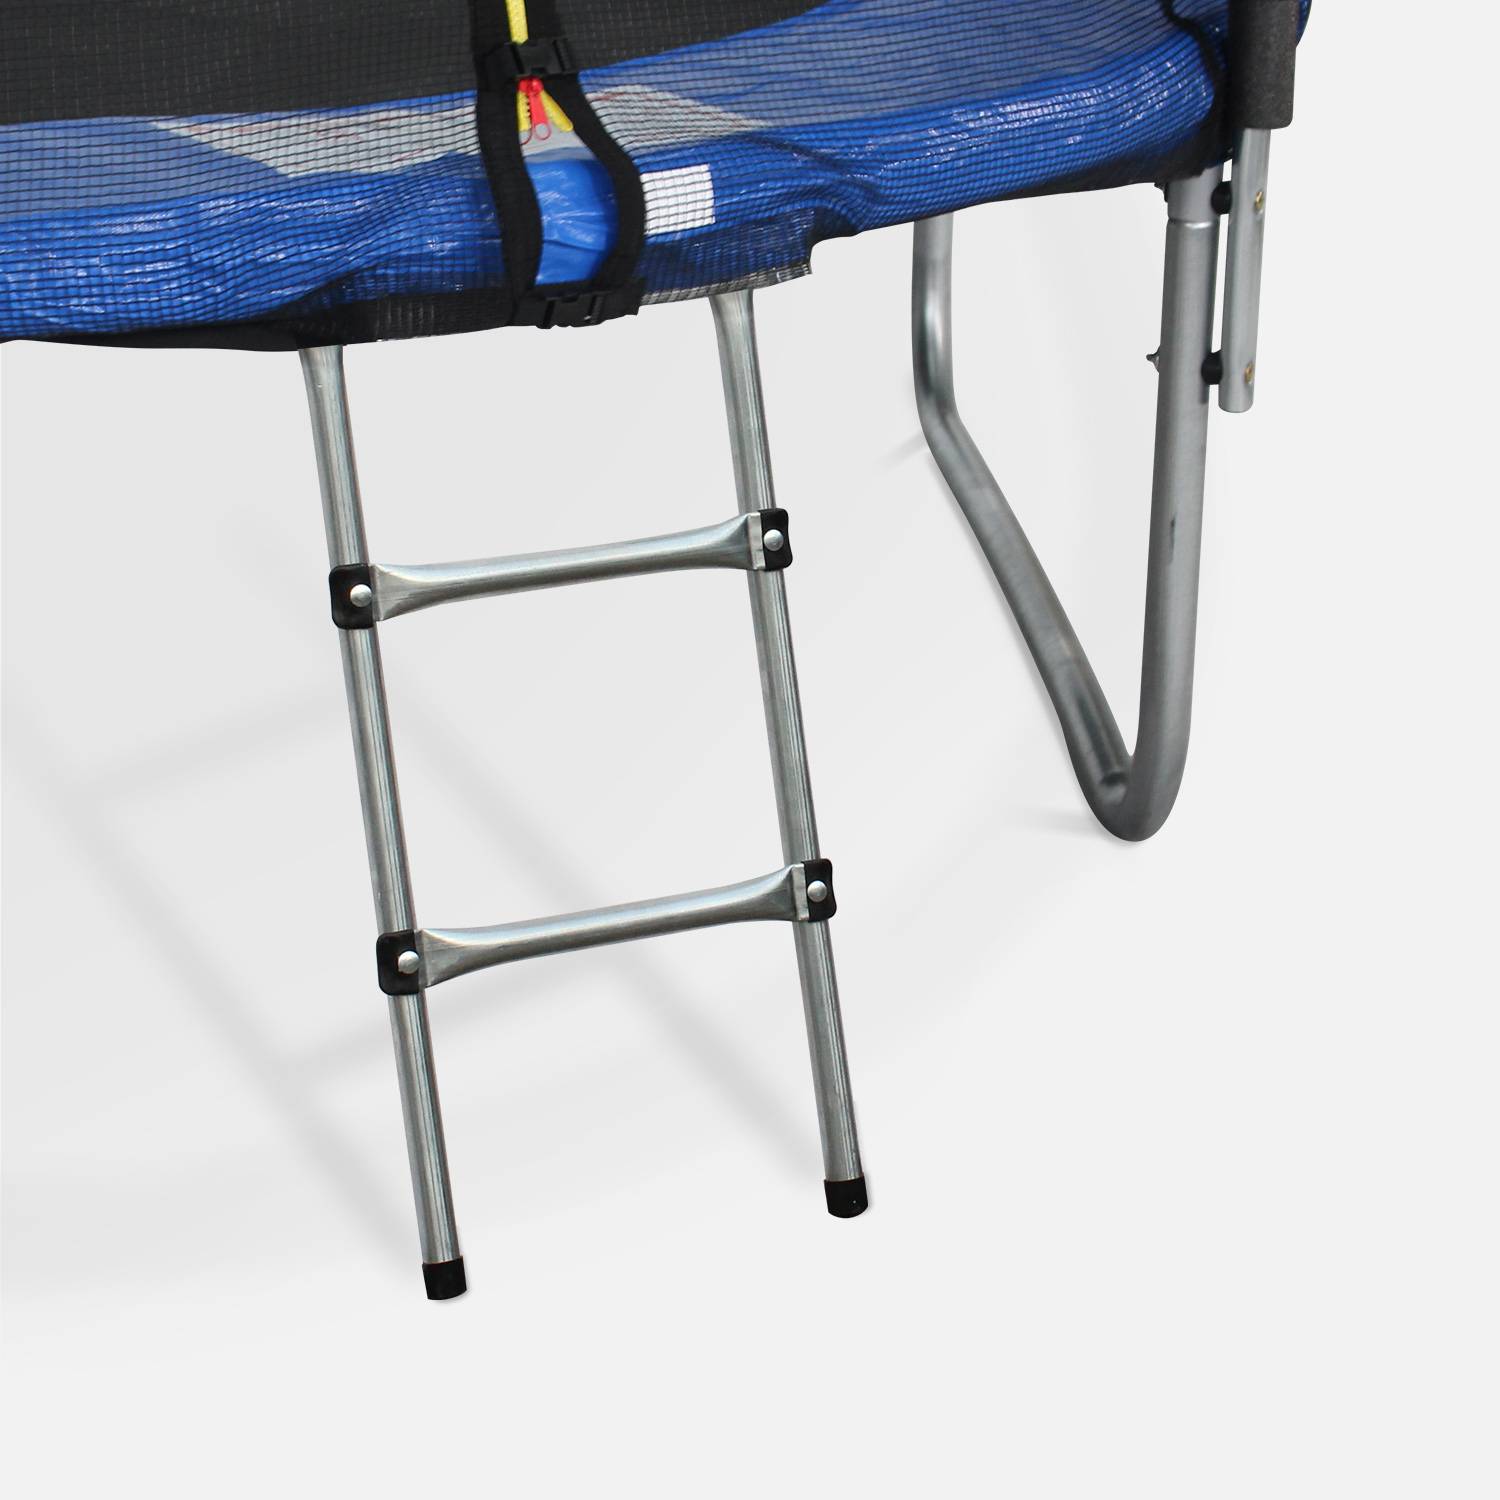 Trampoline Accessories Pack - Ø430 cm - Ladder, Rain Cover, Shoe Net, Anchor Kit Photo2